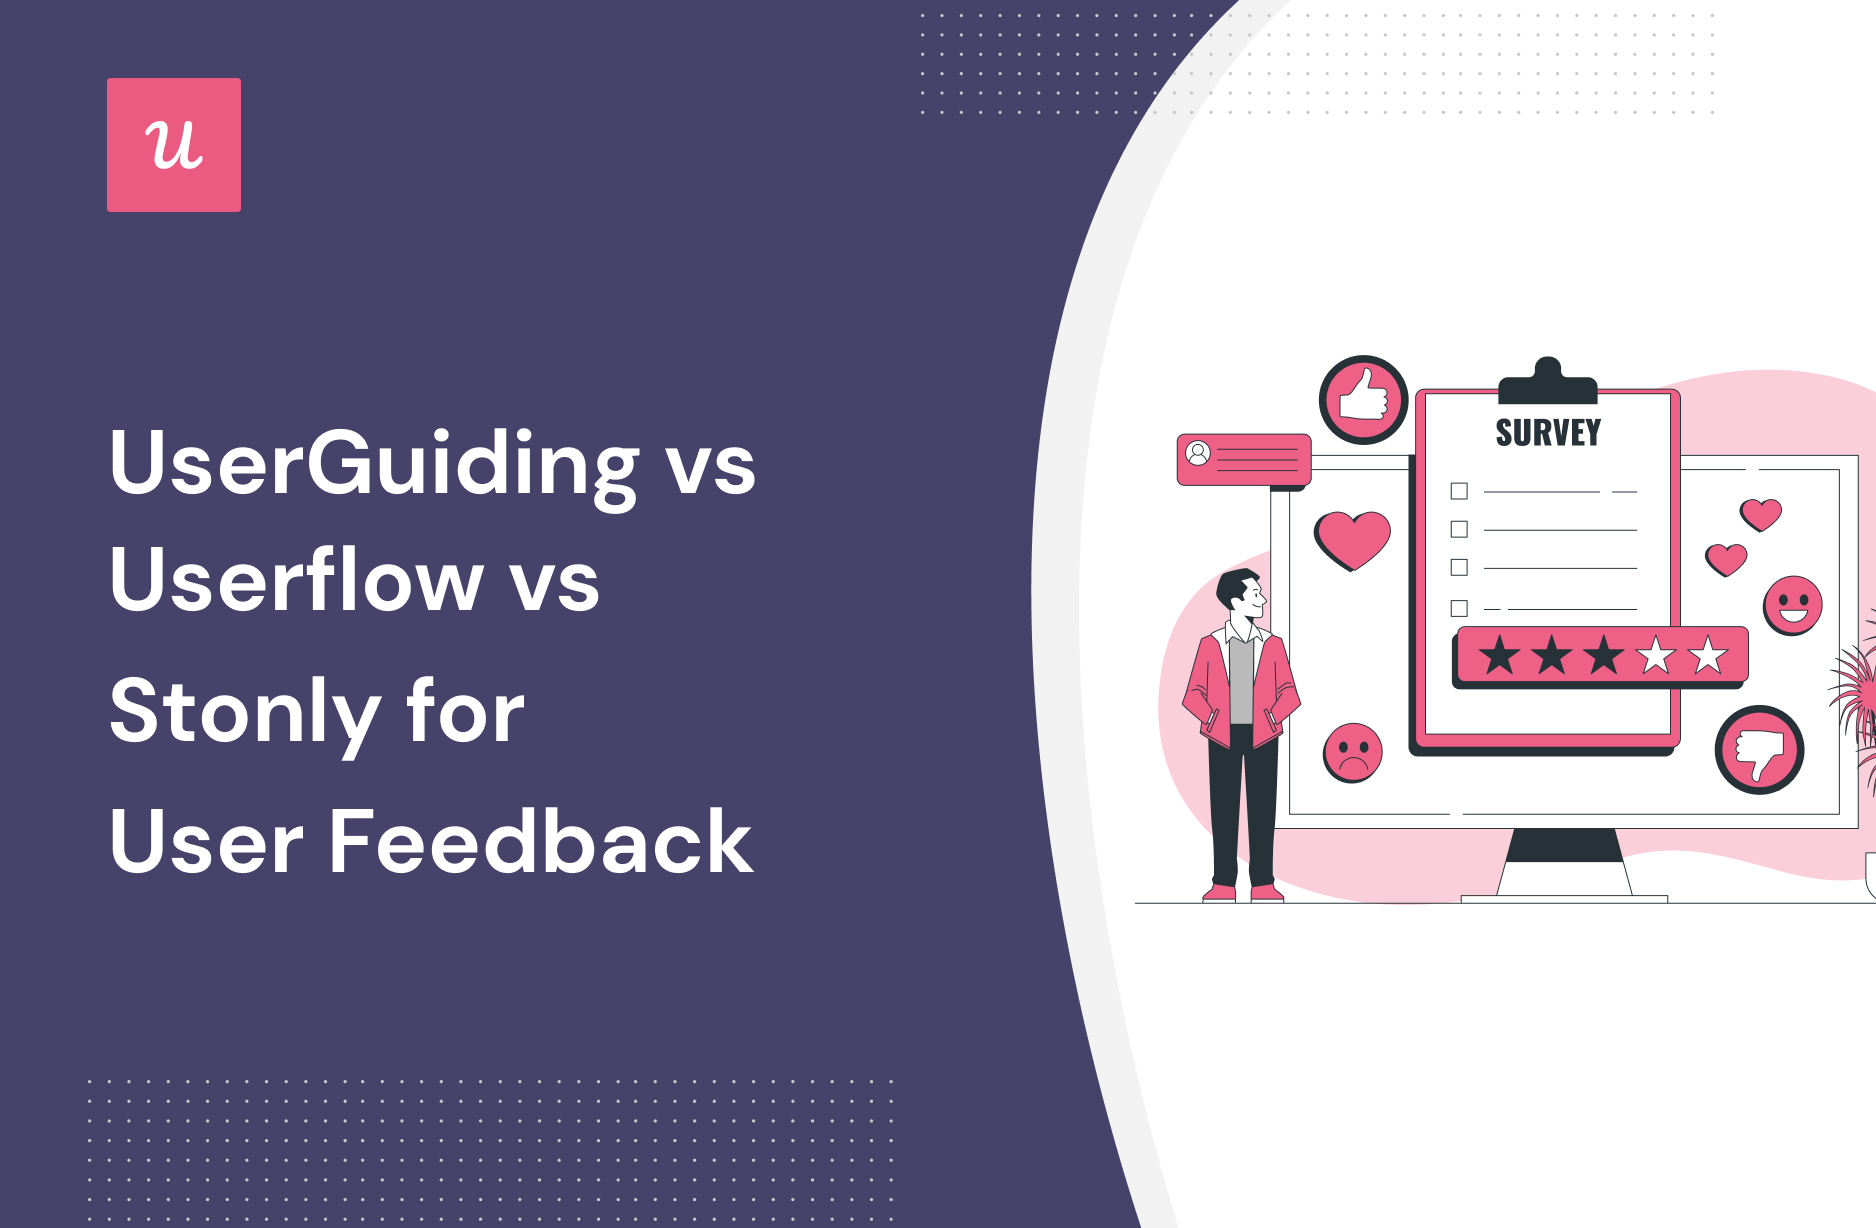 UserGuiding vs Userflow vs Stonly for User Feedback